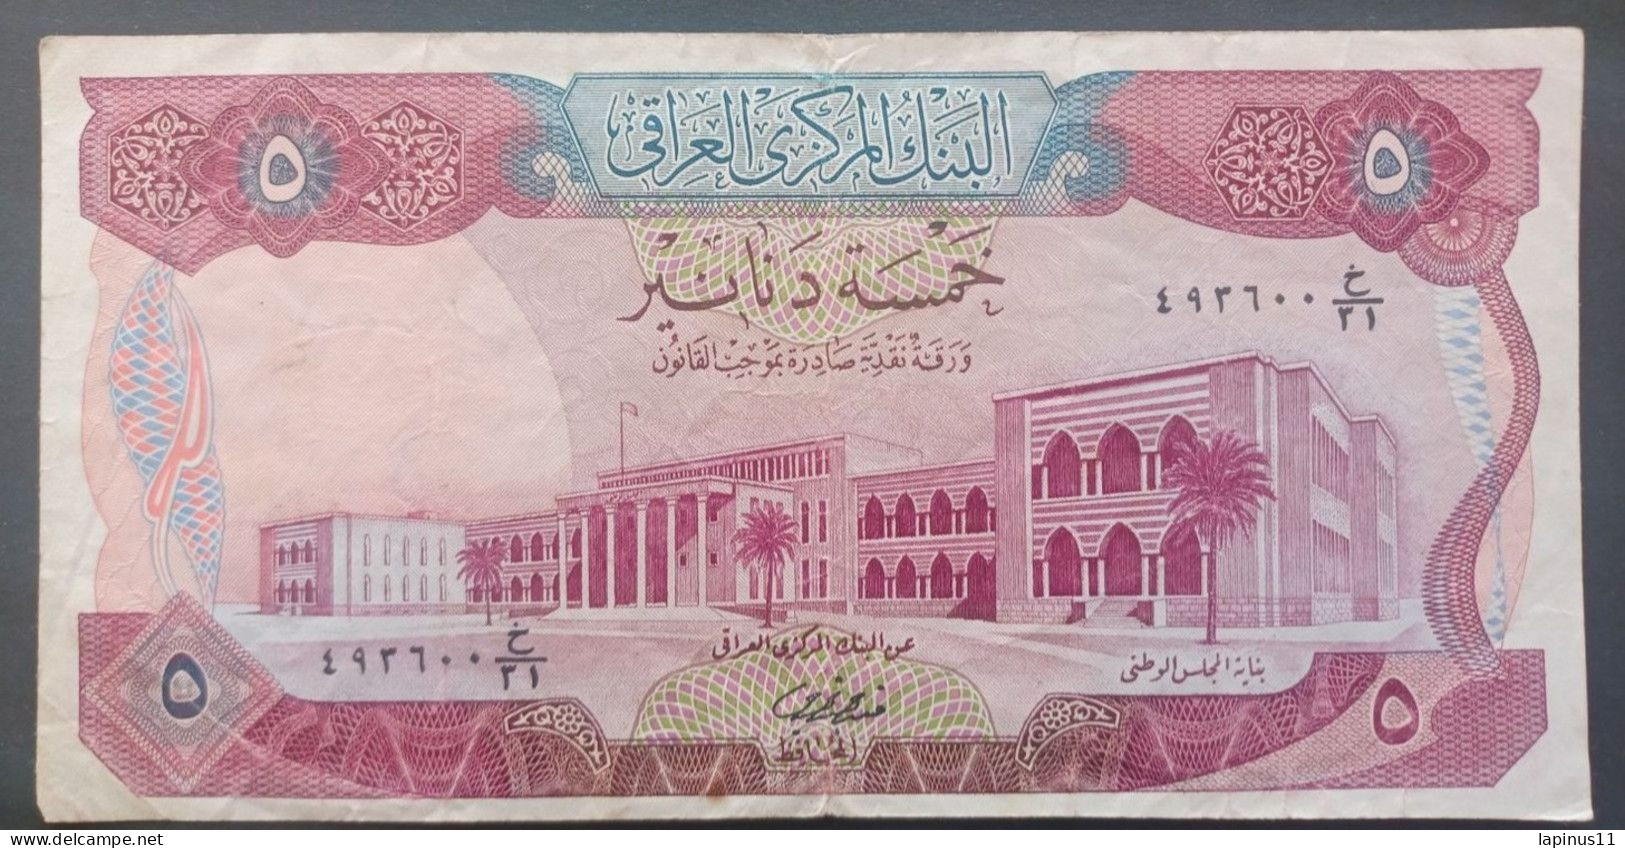 BANKNOTE IRAQ 5 DINARS 1973 CIRCULATED - Irak